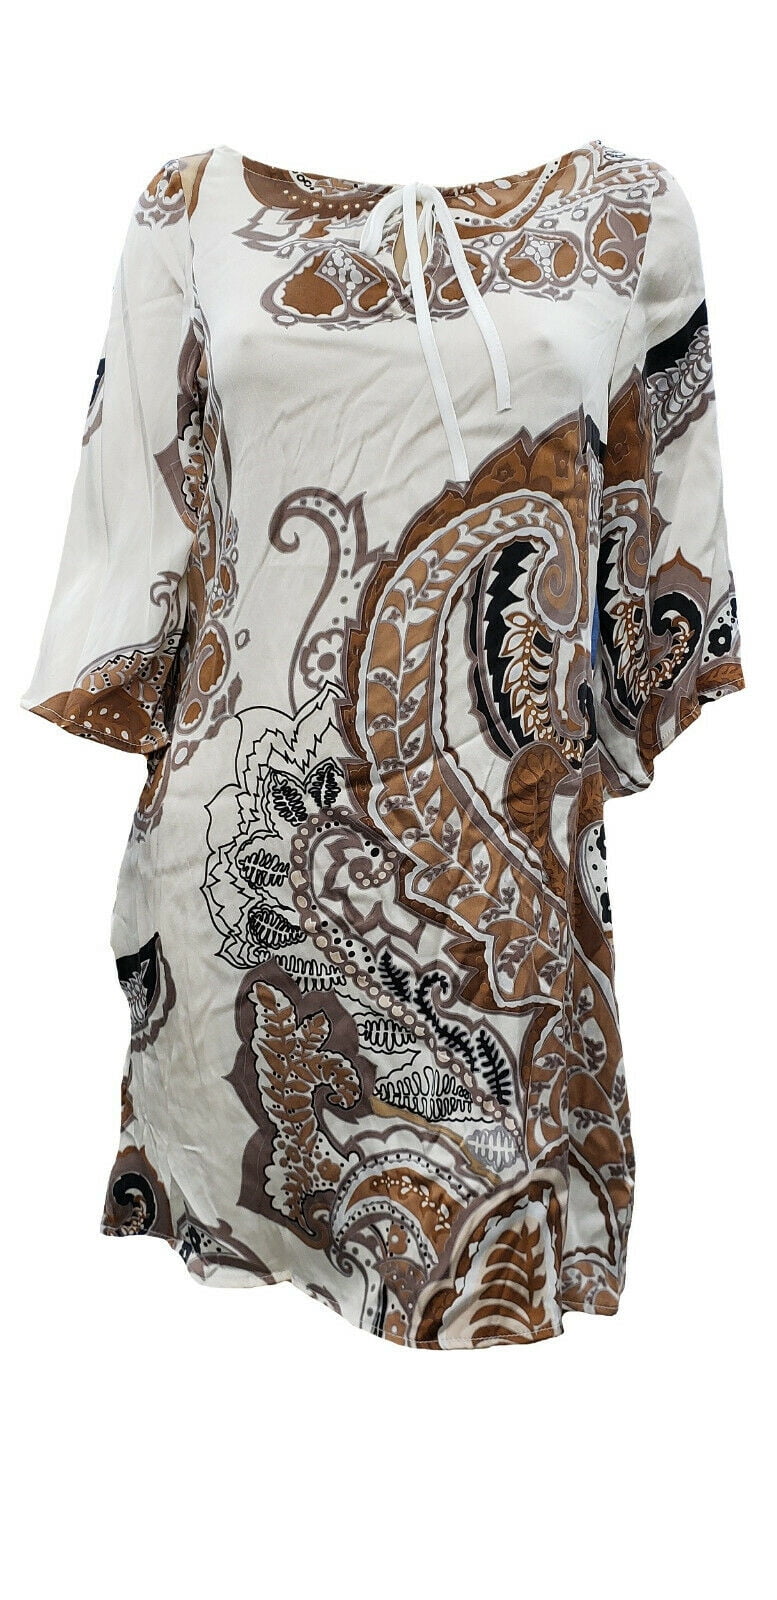 Hale Bob Women's Printed Silk Dress Retail Price $249.00 - Walmart.com